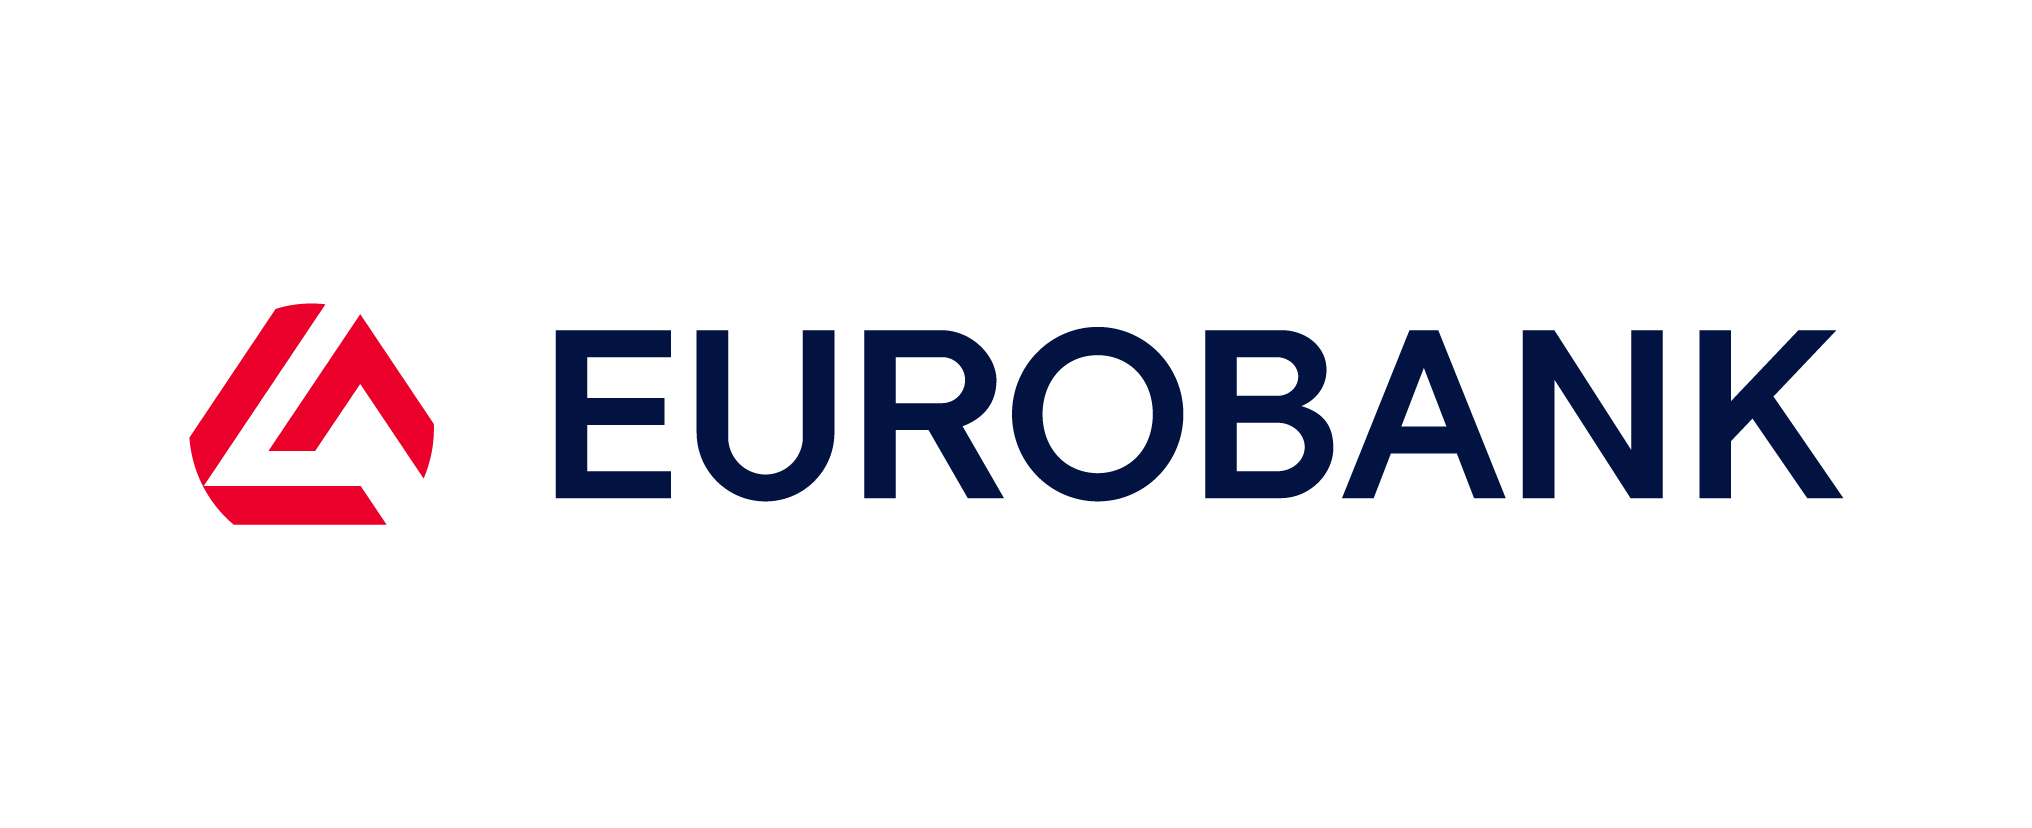 Eurobank-NewLogo.jpg